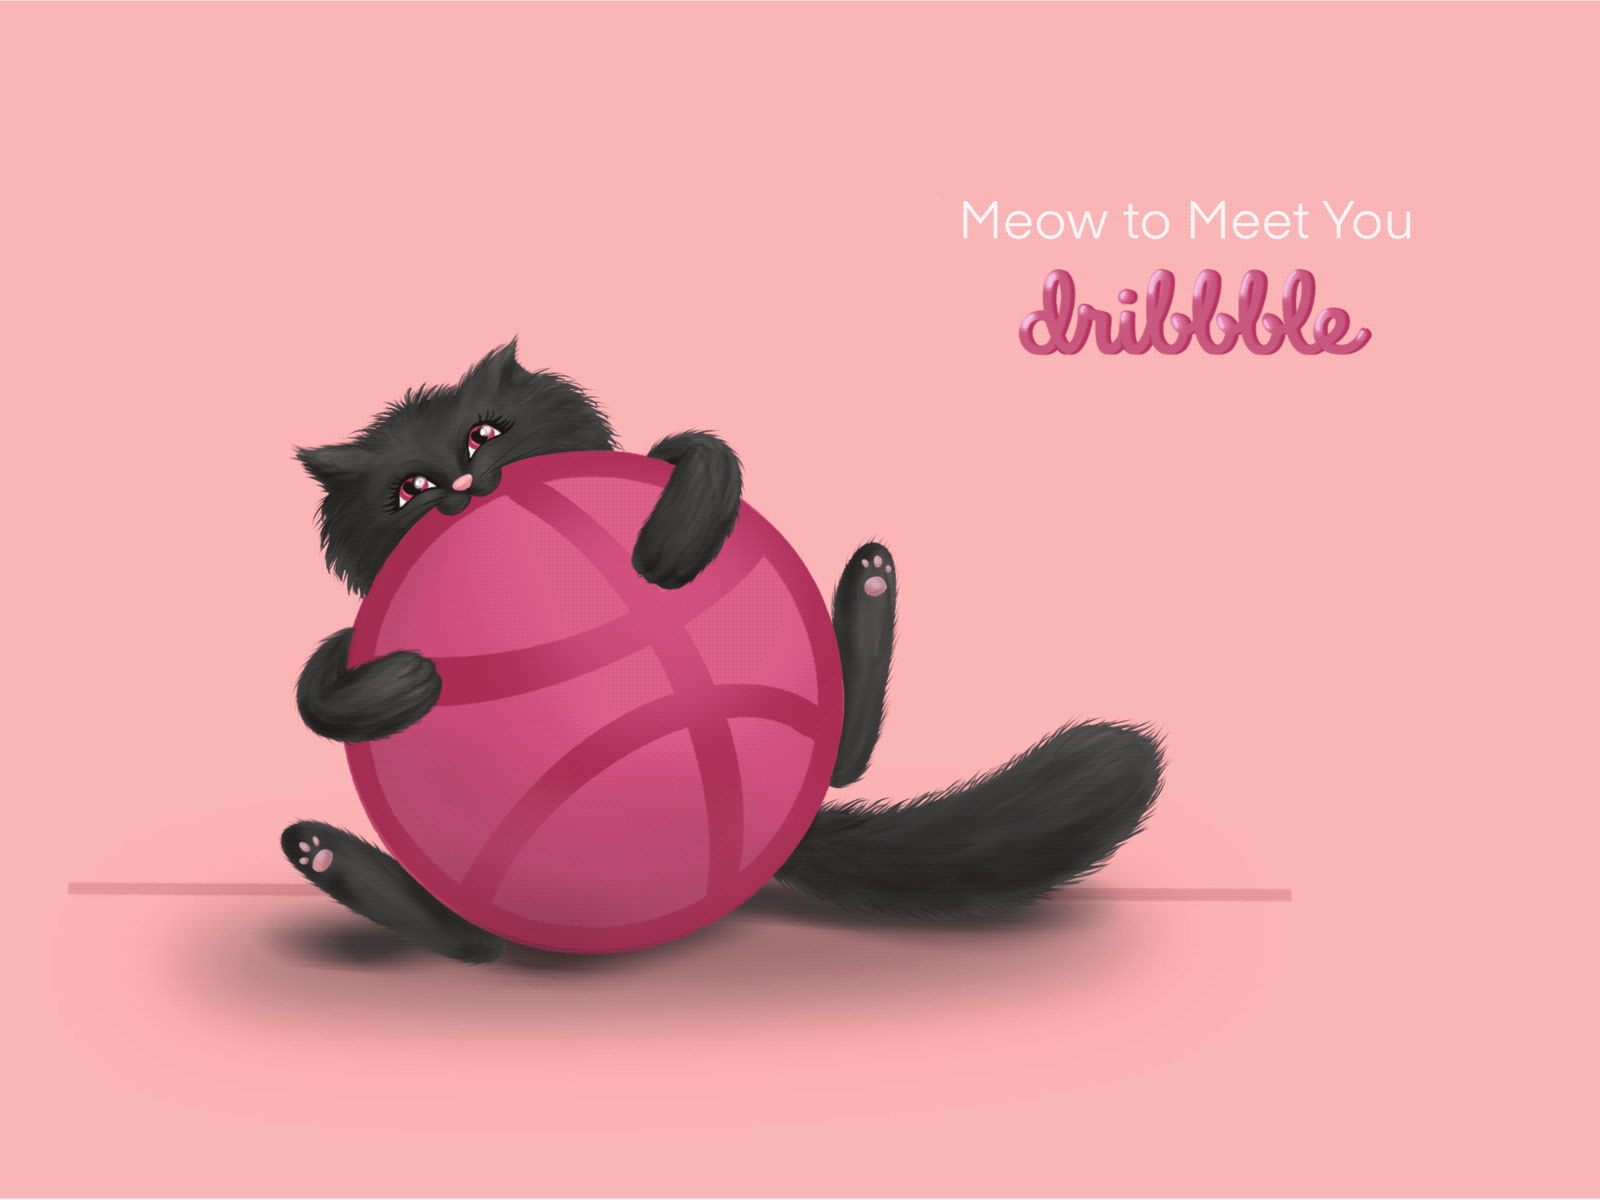 Meow to Meet You, Dribbble!